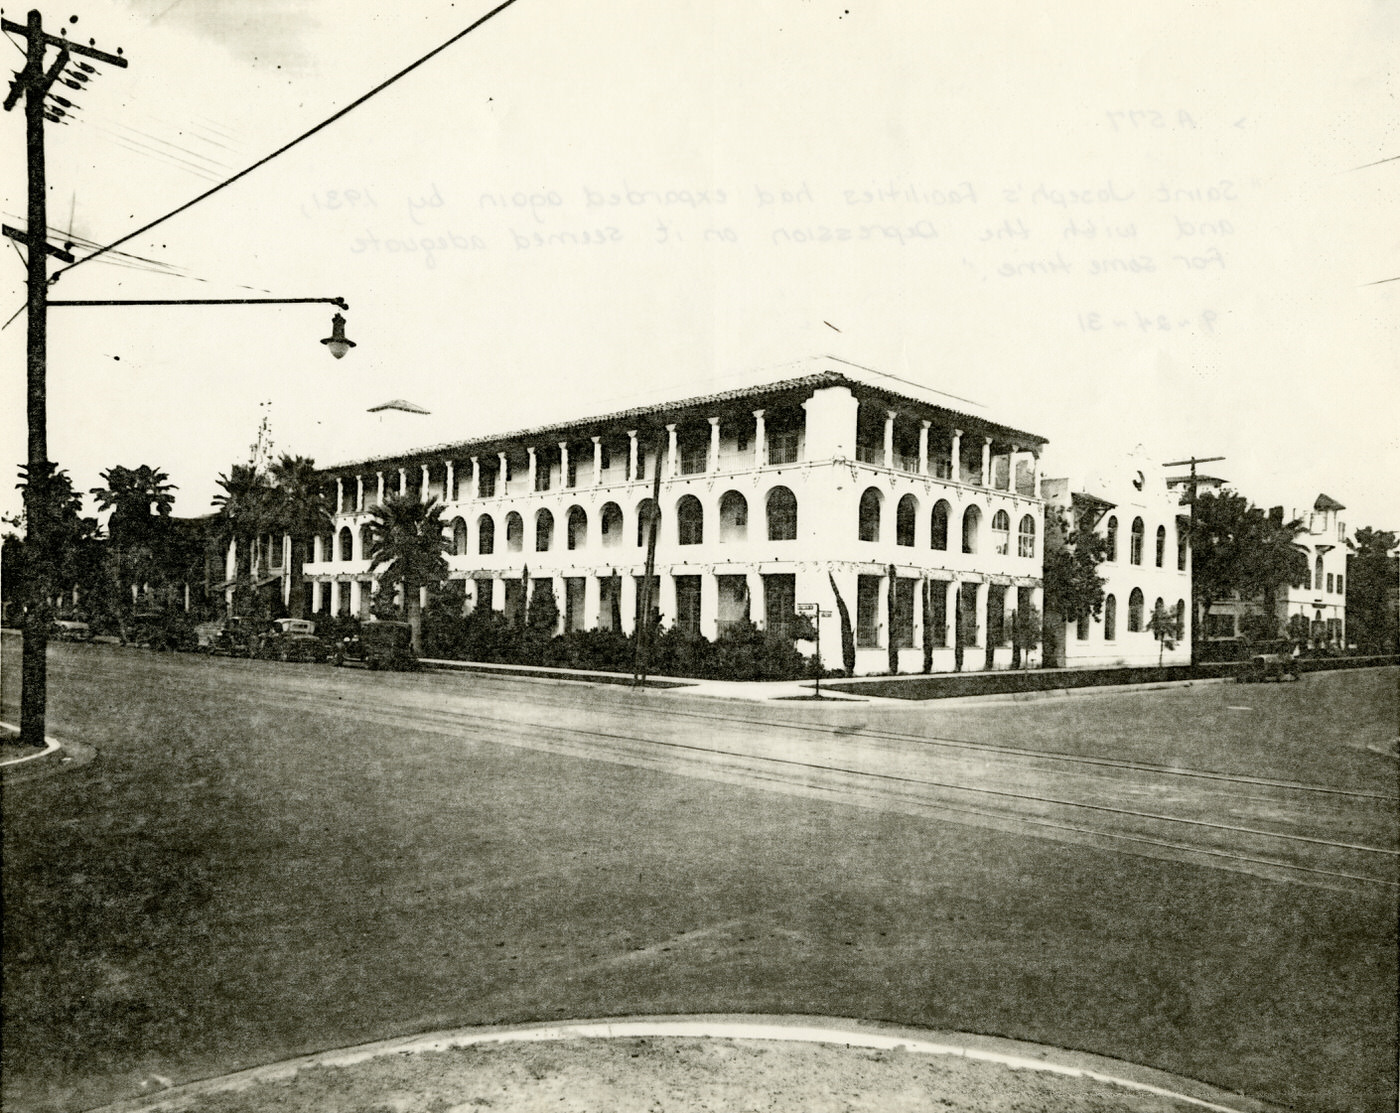 Saint Joseph's Facilities After Expansion, 1930s